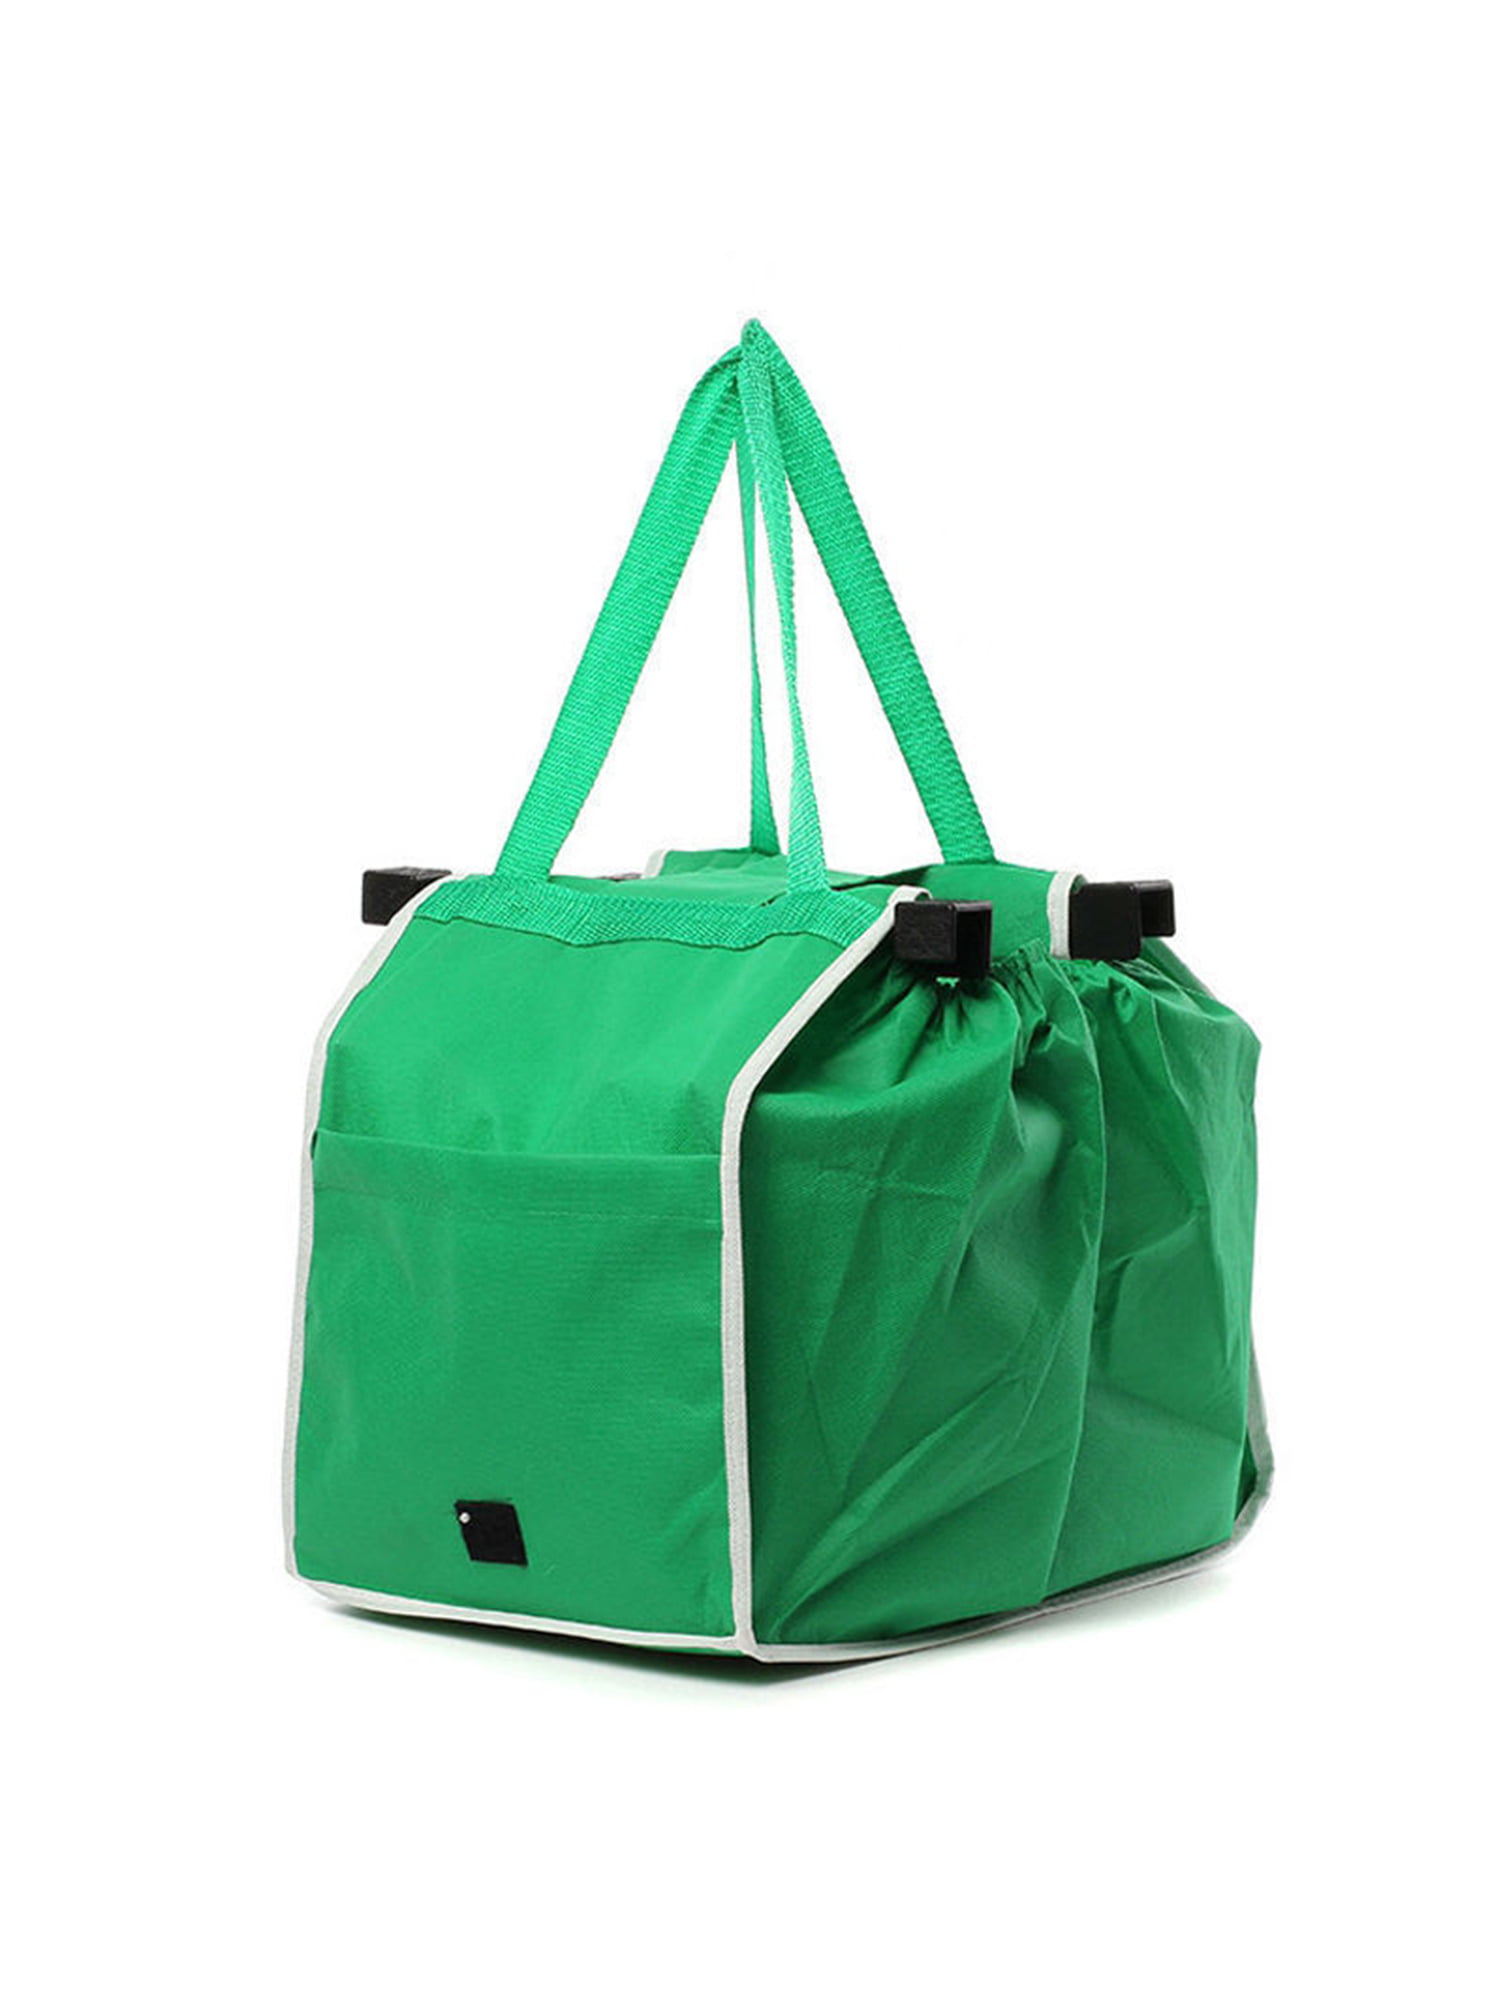 4pc REUSABLE SHOPPING CART BAGS Eco-Friendly Trolley Supermarket Foldabl Handbag 